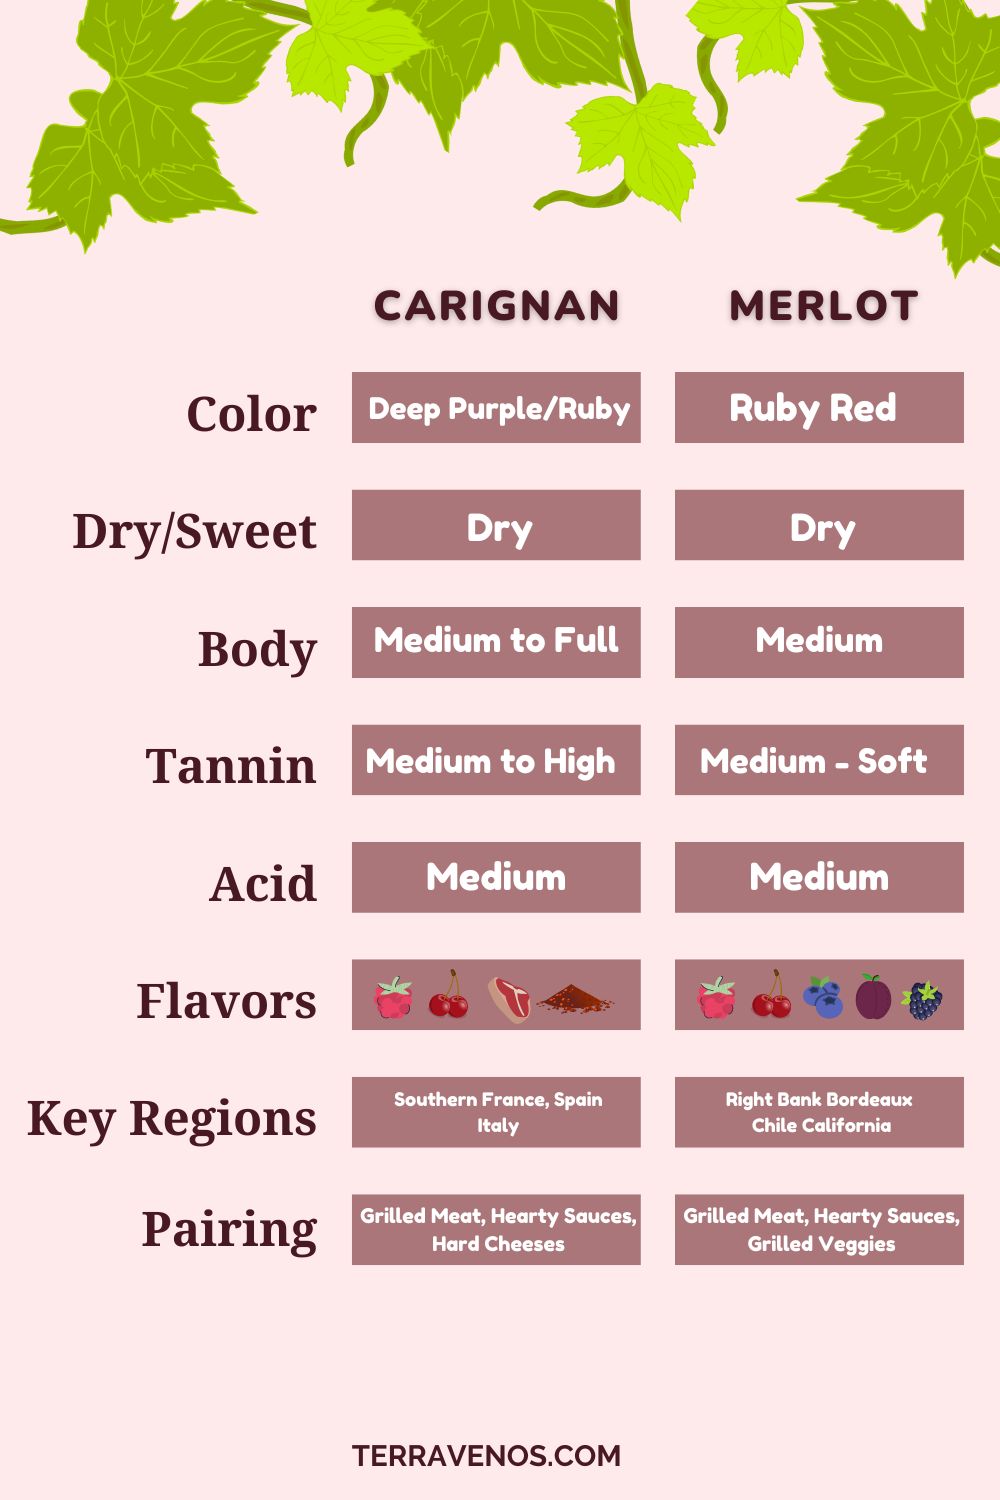 merlot-vs-carignan-wine-profile-infographic